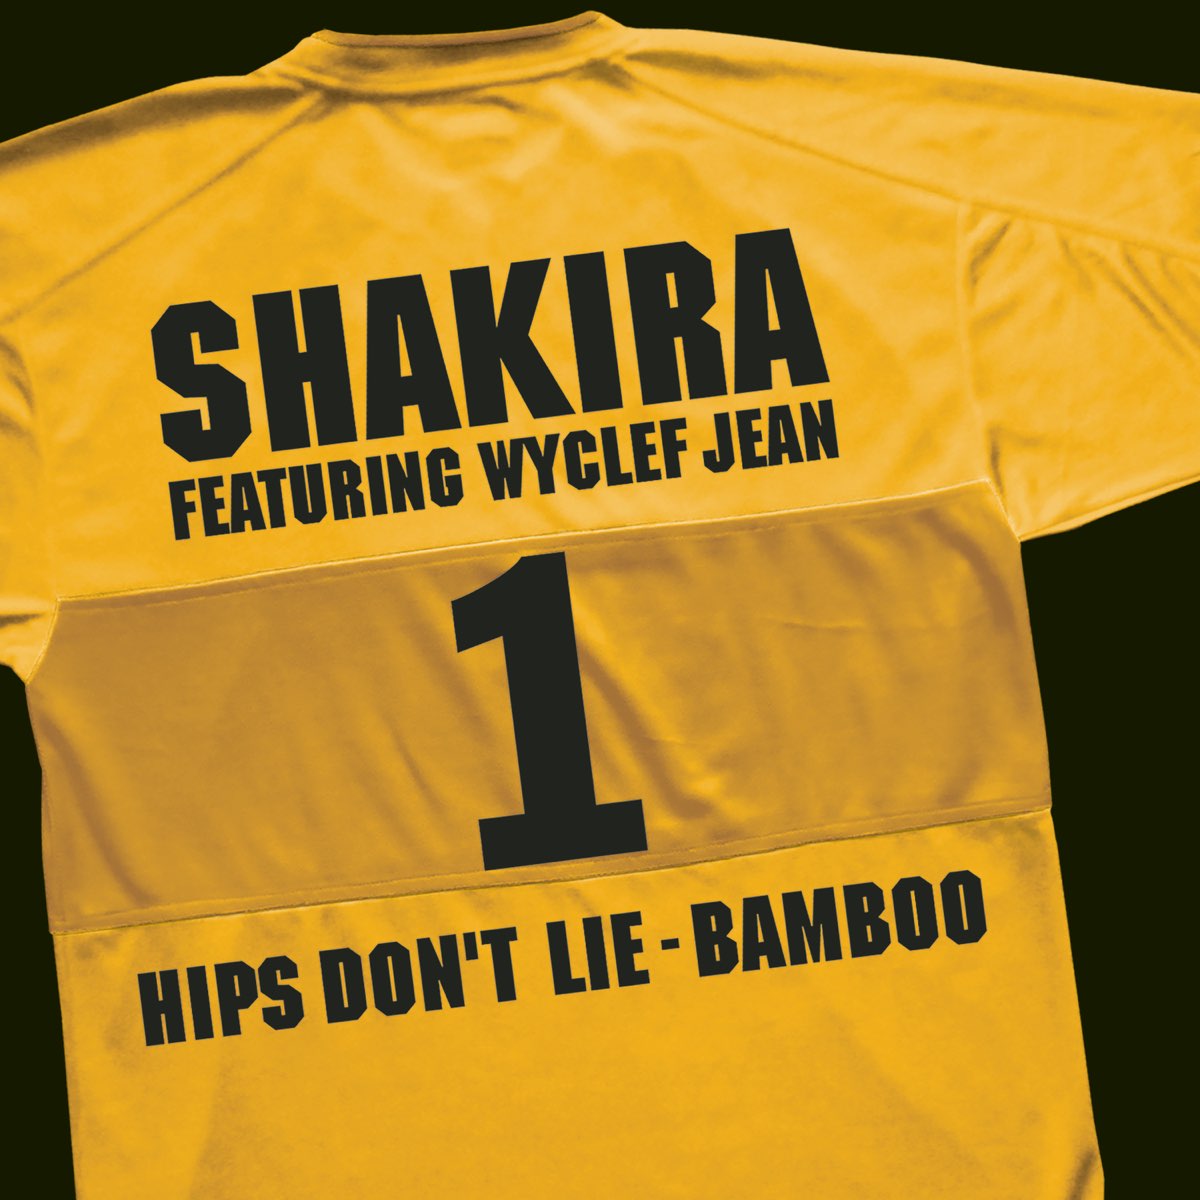 Hips Don't Lie - Bamboo (feat. Wyclef Jean) - Single – Album par Shakira  featuring Wyclef Jean – Apple Music